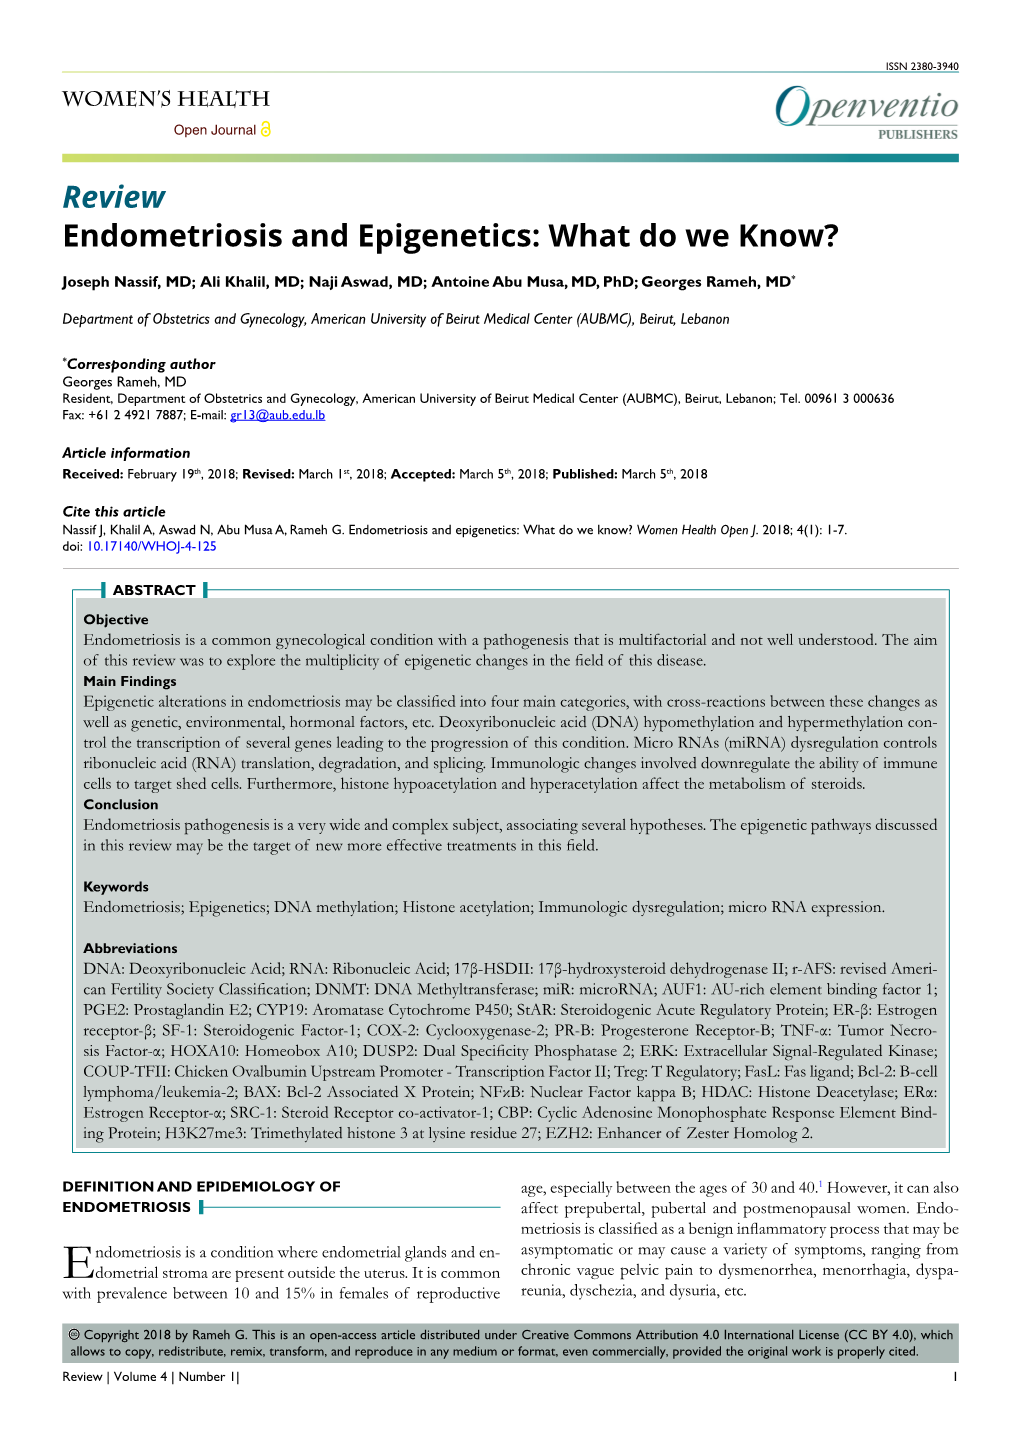 Endometriosis and Epigenetics: What Do We Know?